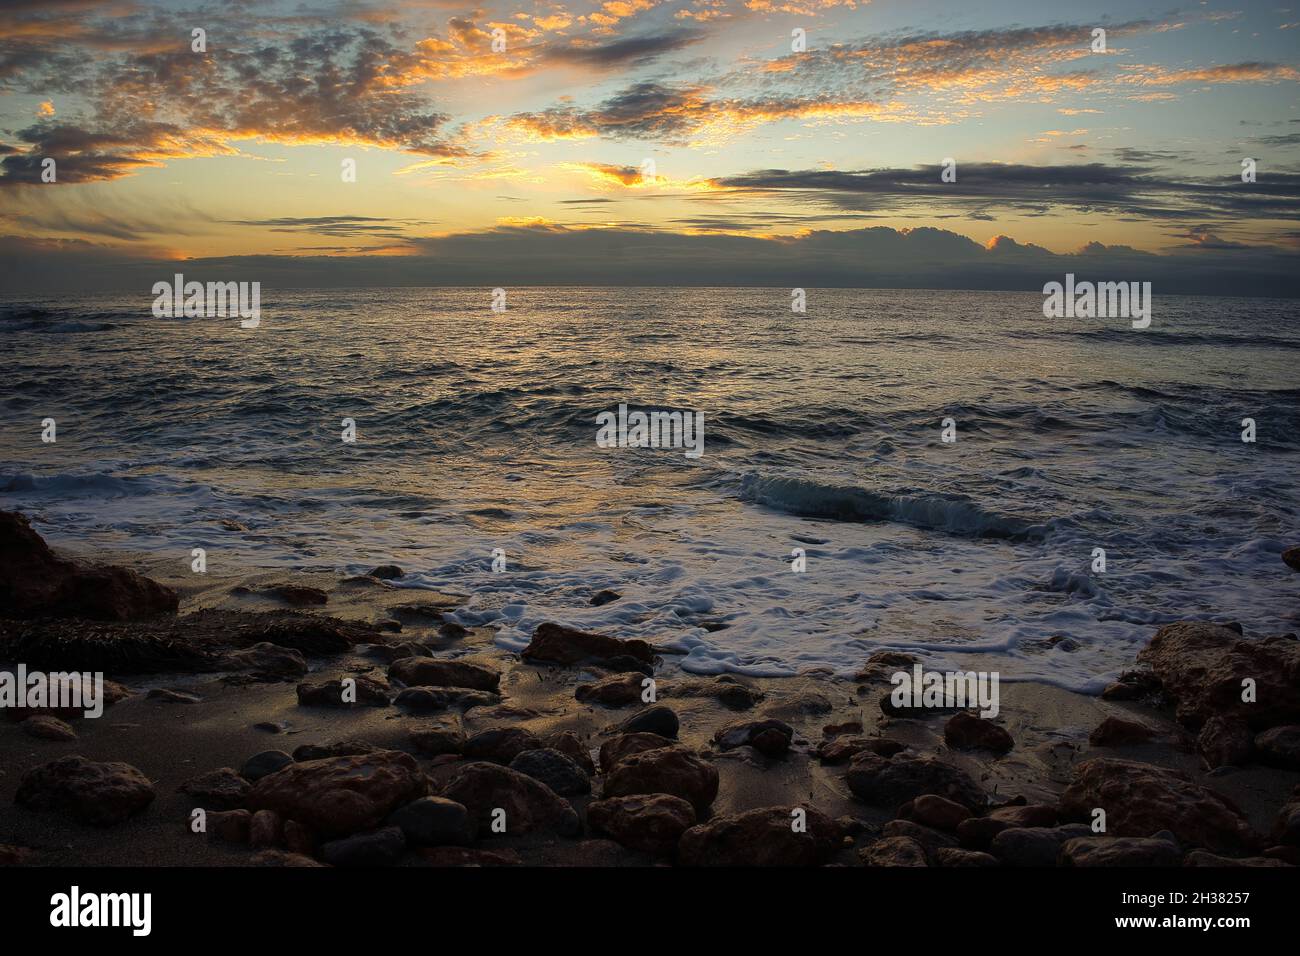 The coast in the Mediterranean Sea at sunrise Stock Photo